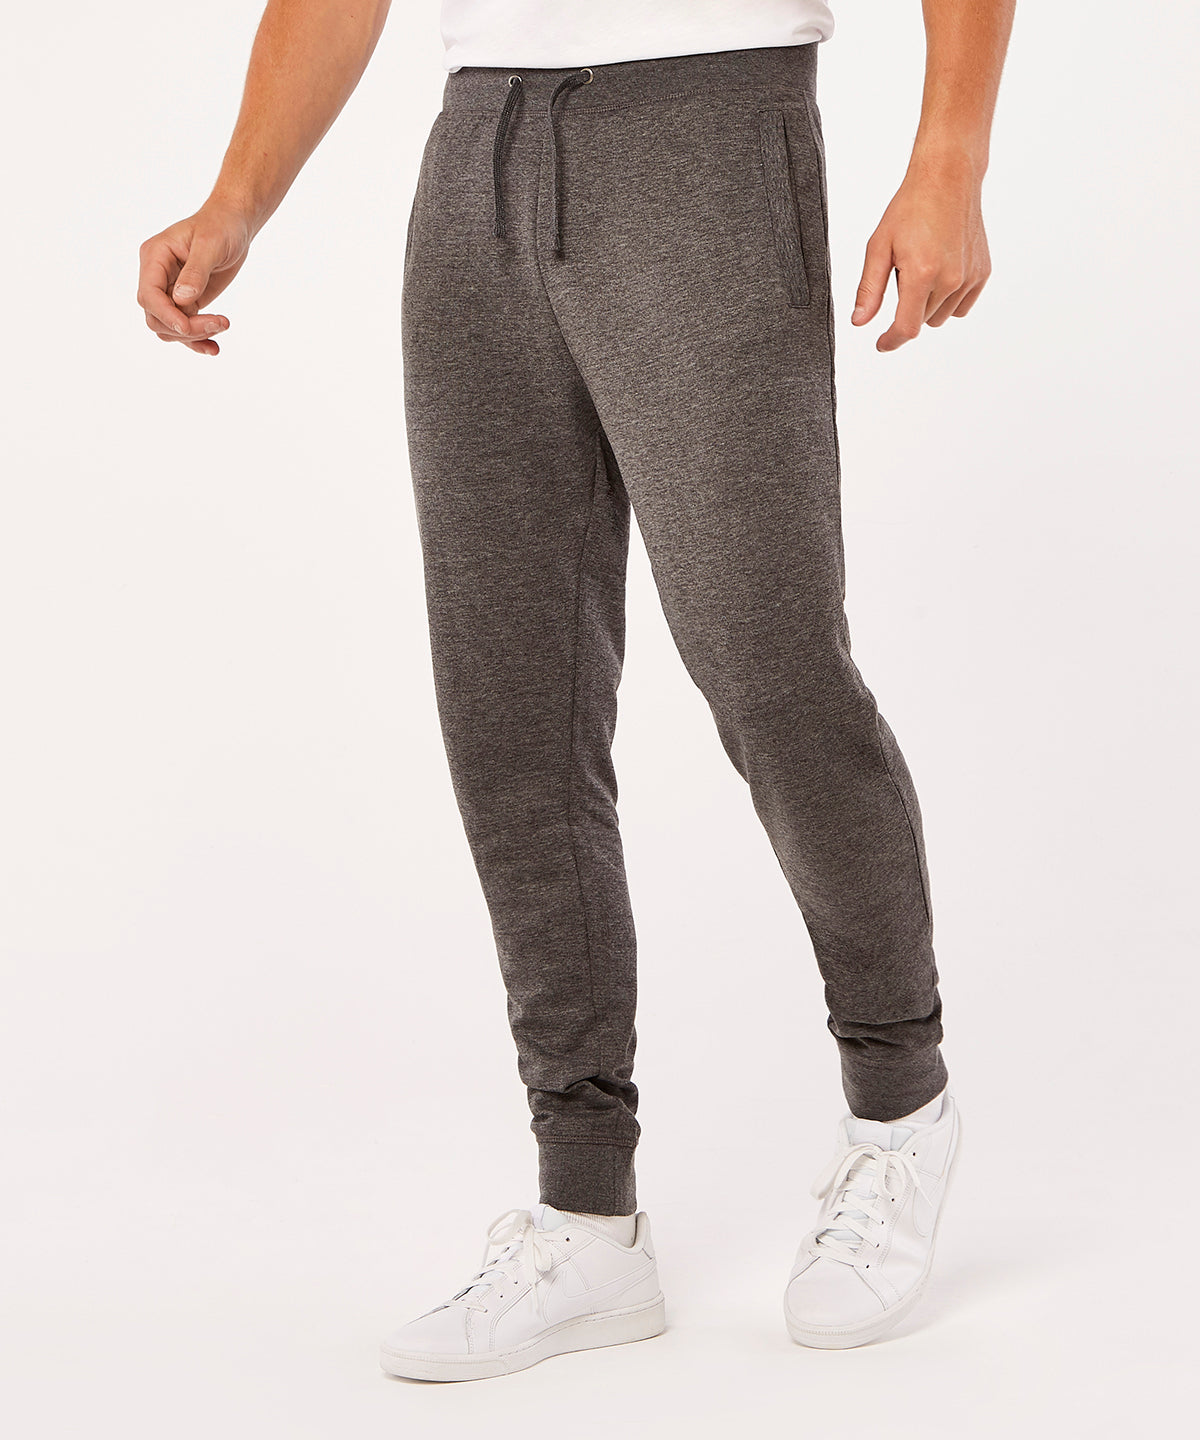 Joggingbuxur - Slim-fit Sweatpants